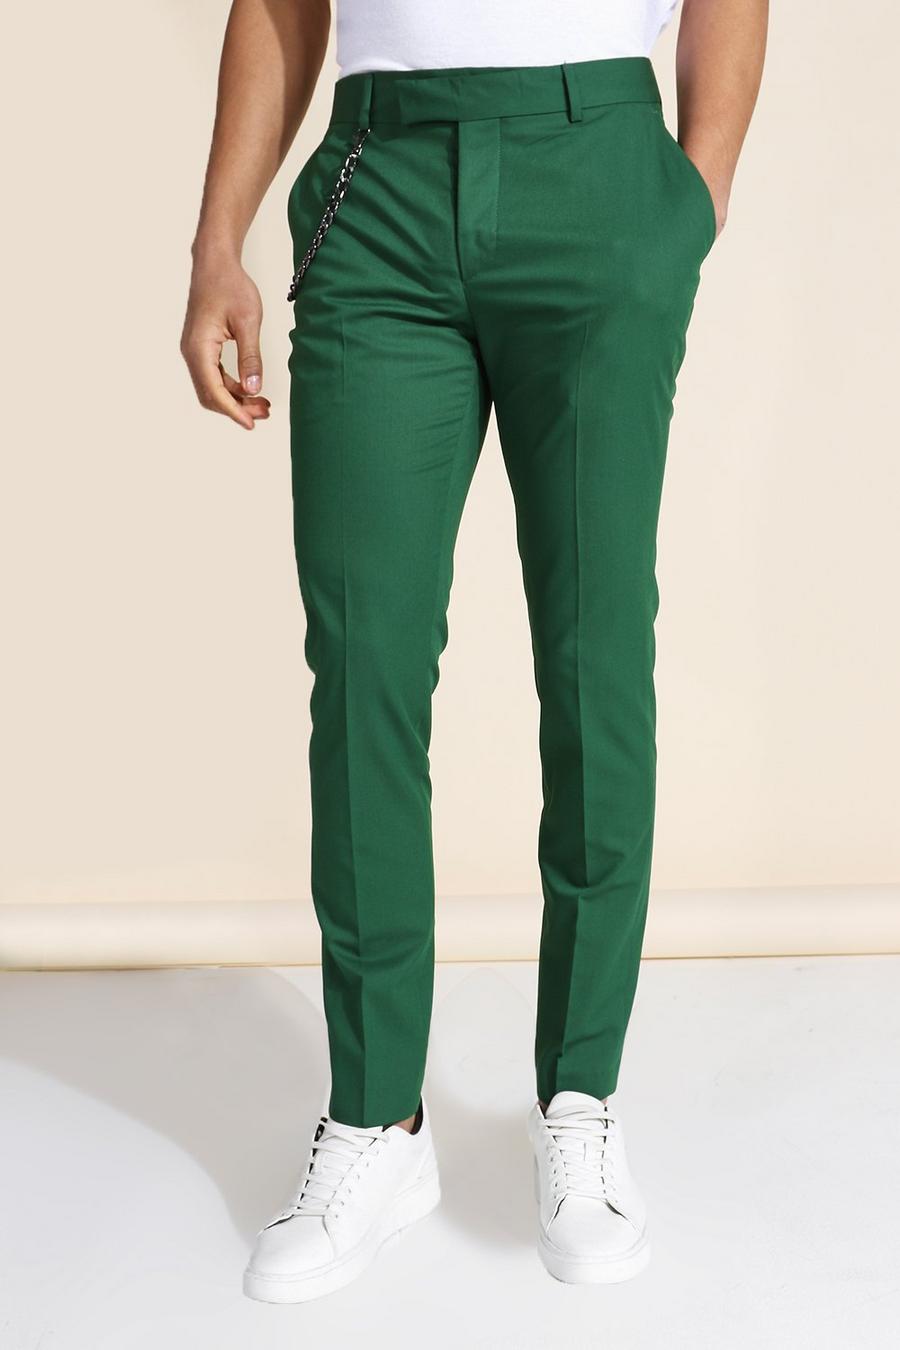 Skinny Anzughose mit Kette, Dunkelgrün green